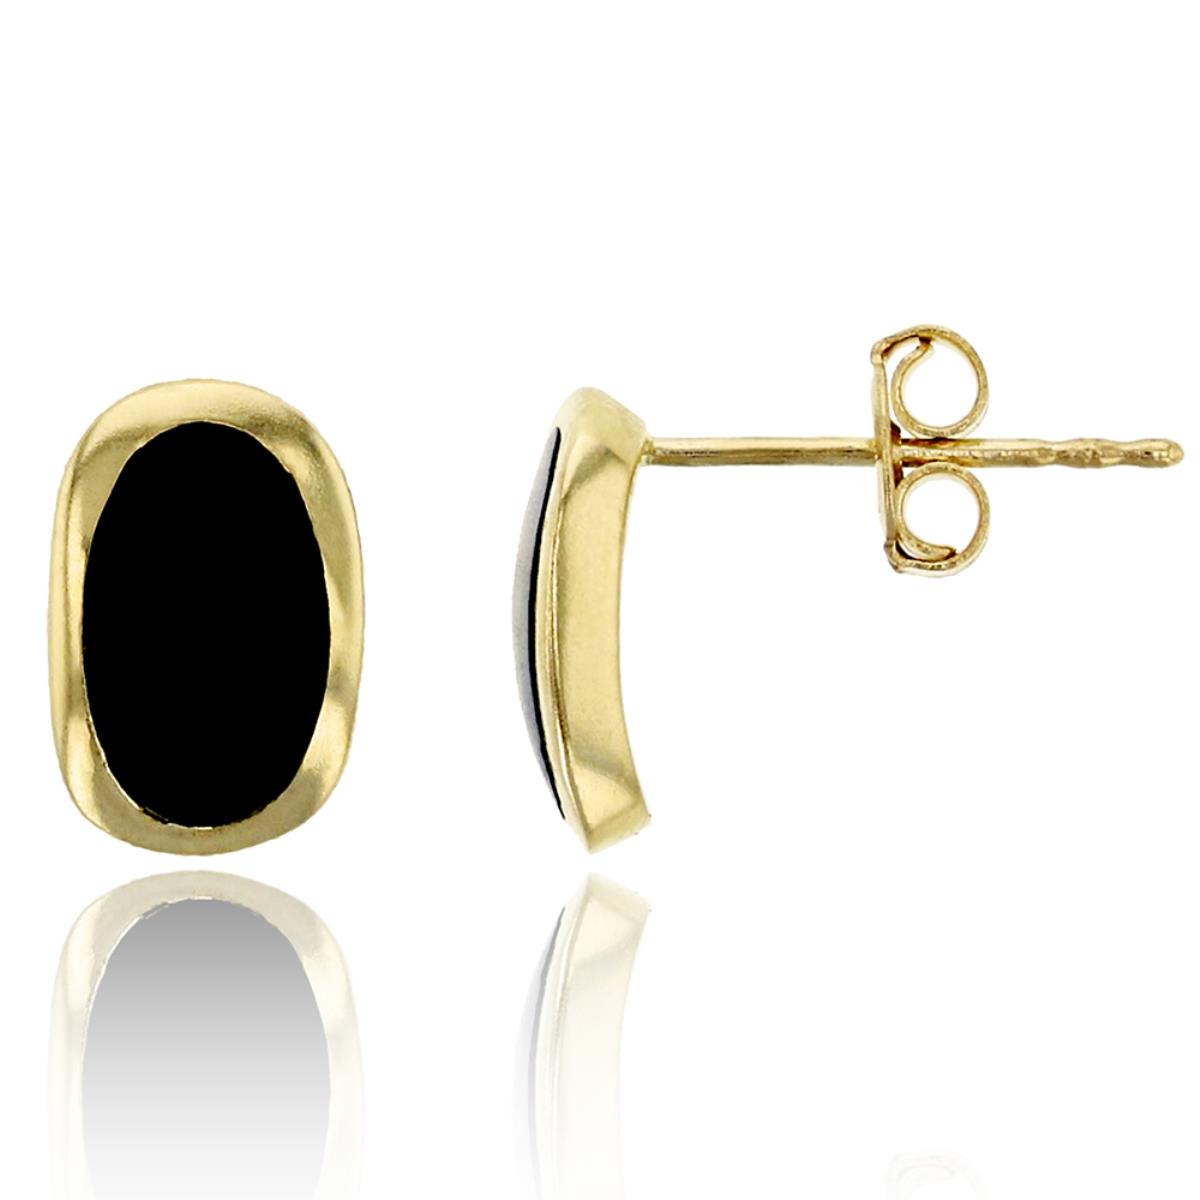 14K Yellow Gold Oval Black Onyx Stud Earrings with Push Backs